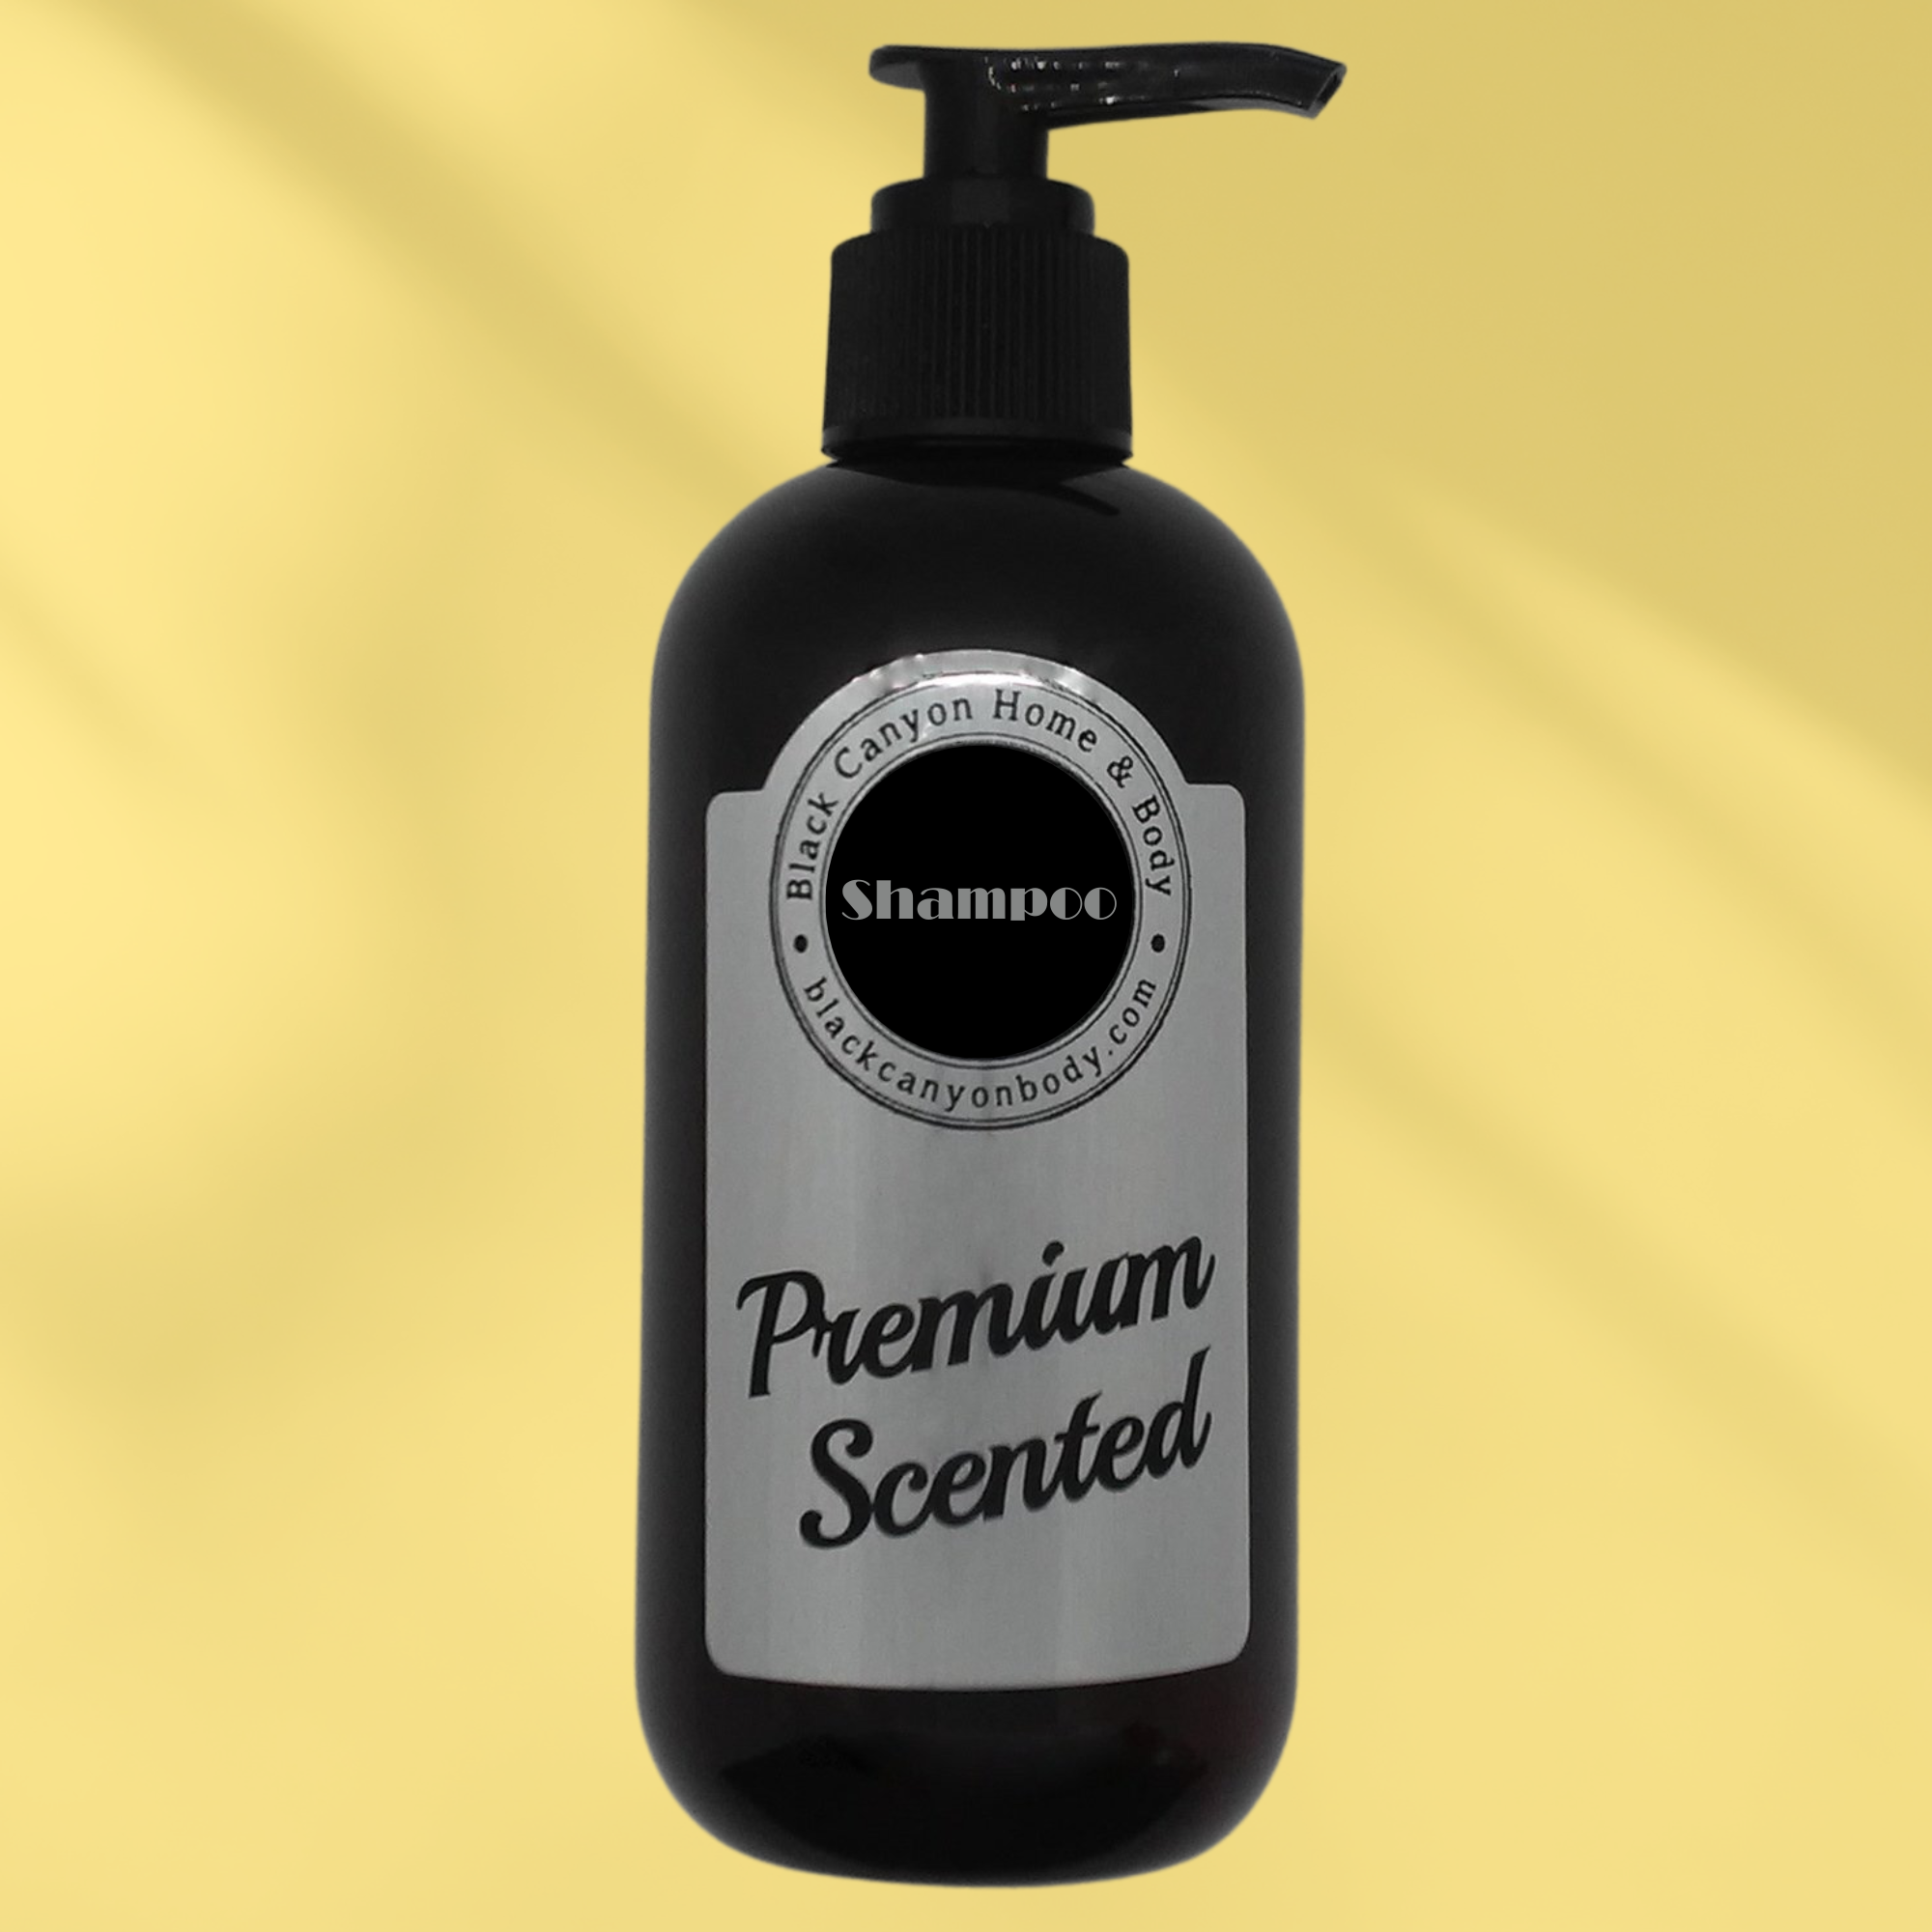 Paydens Cobalt Eucalyptus & Cedarwood Scented Shampoo with Argan Oil For Men